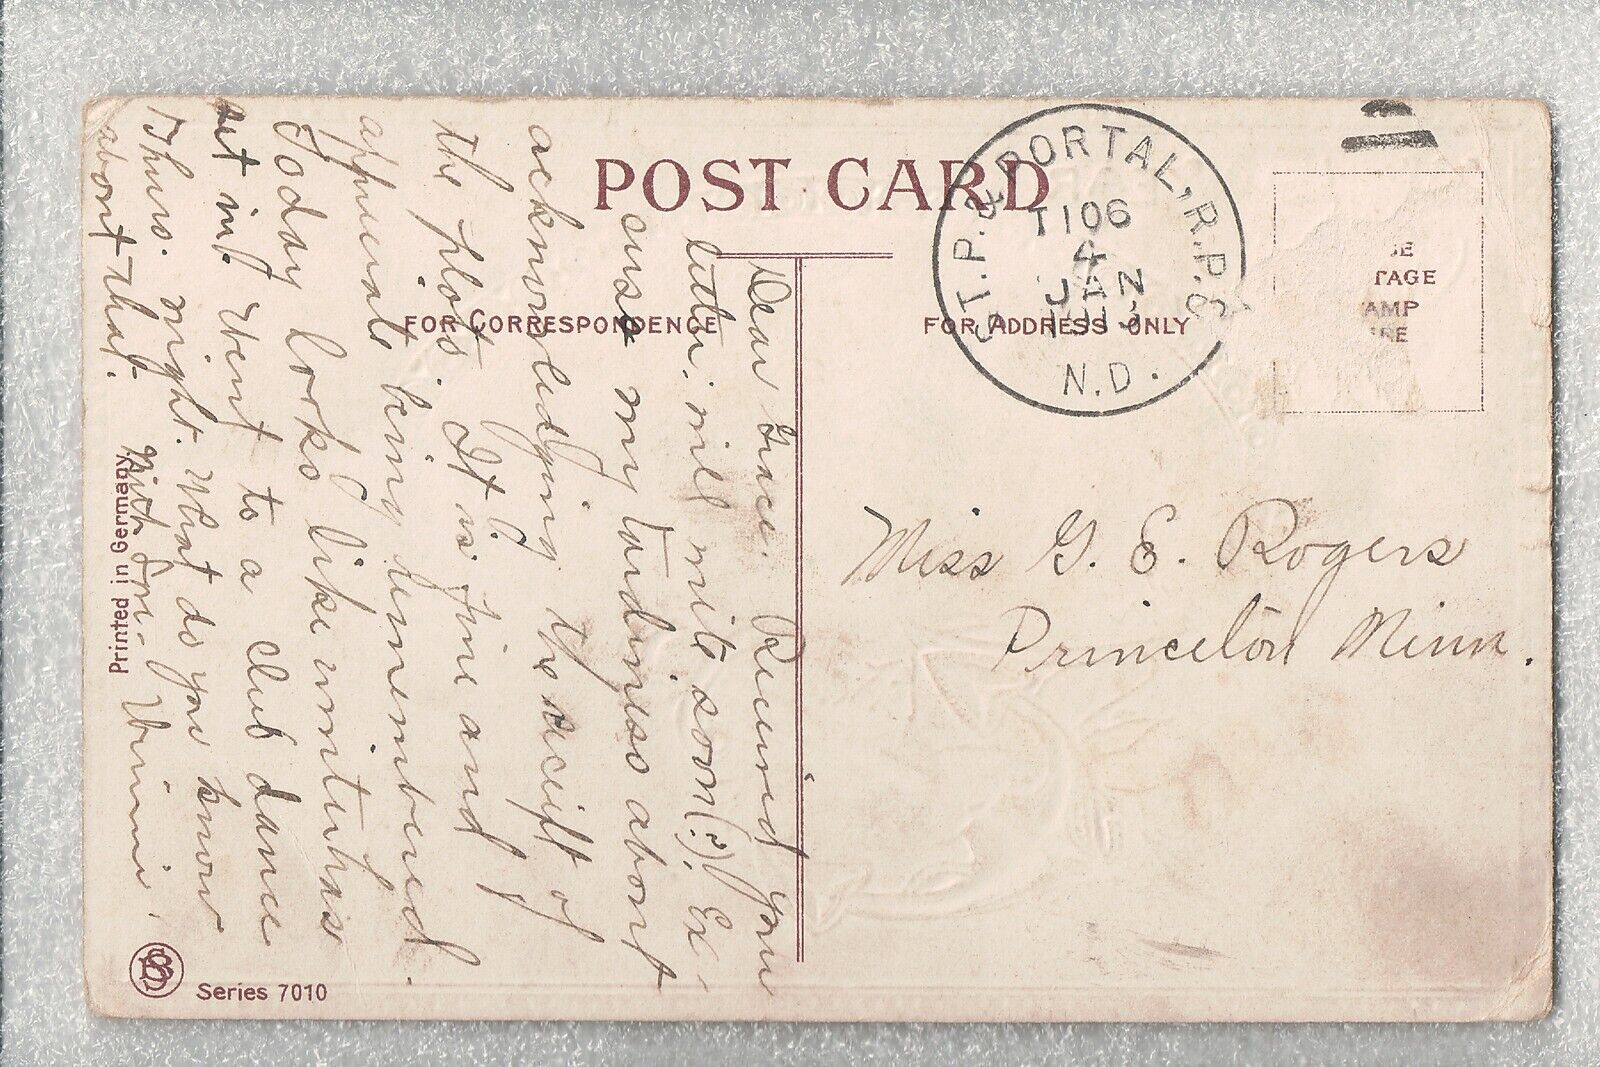 1913 RPO Postcard-Happy New Year to Miss Rogers Princeton Minnesota